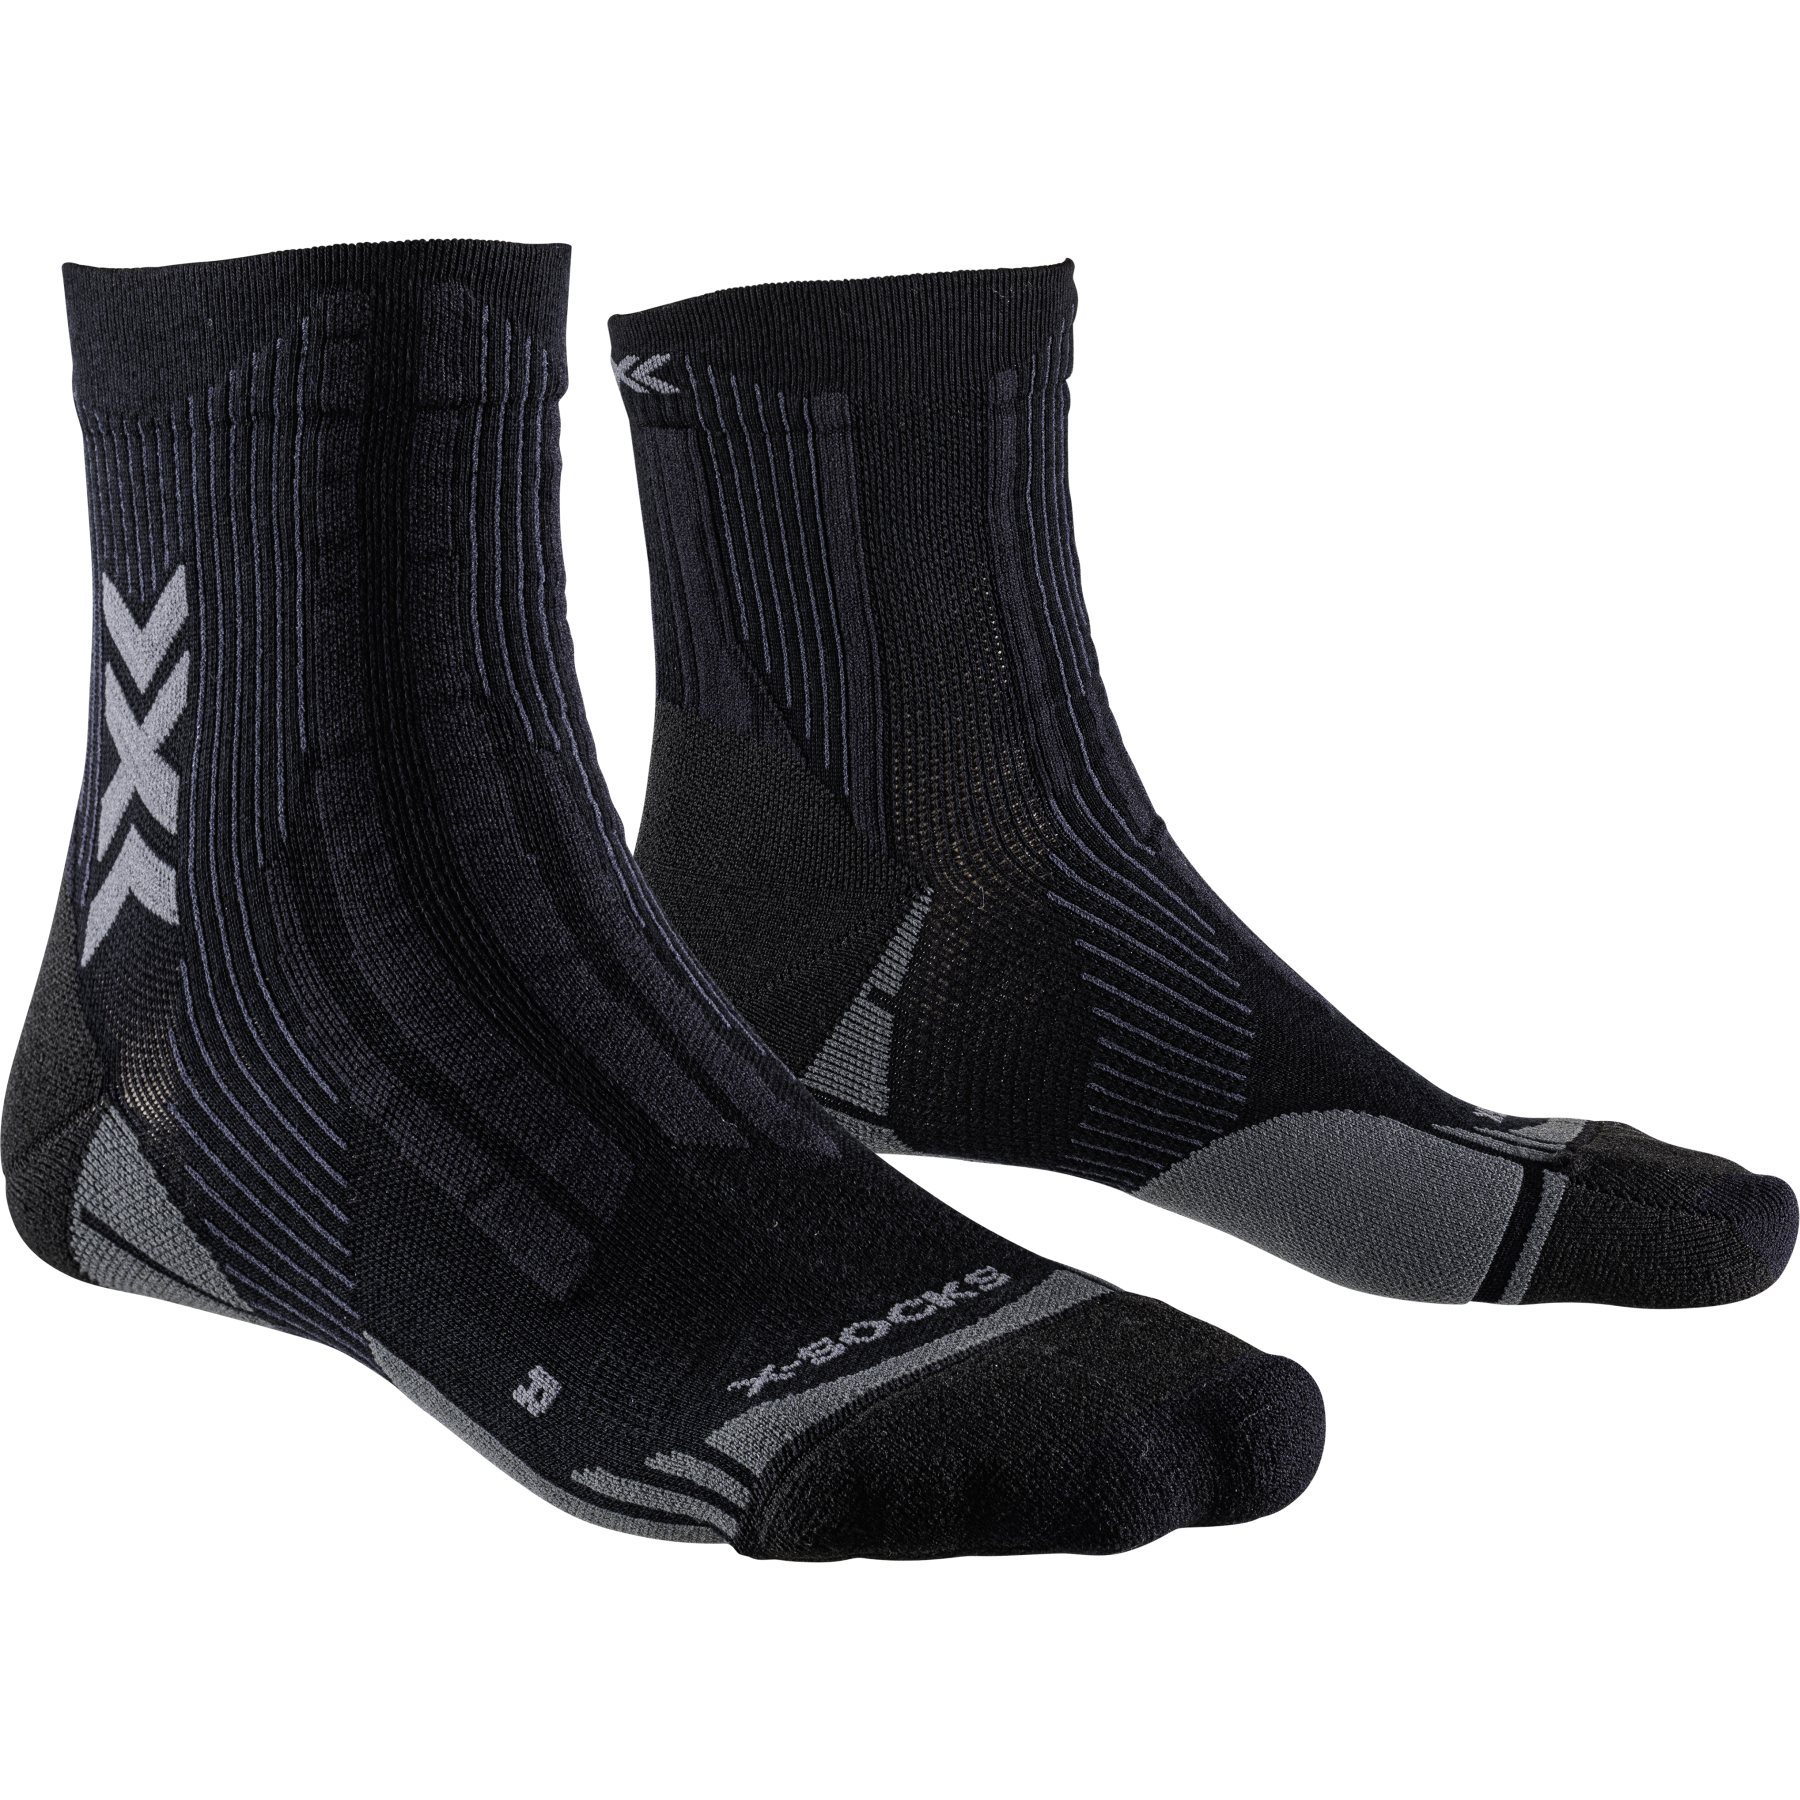 Produktbild von X-Socks Hike Perform Natural Ankle Socken - black/charcoal